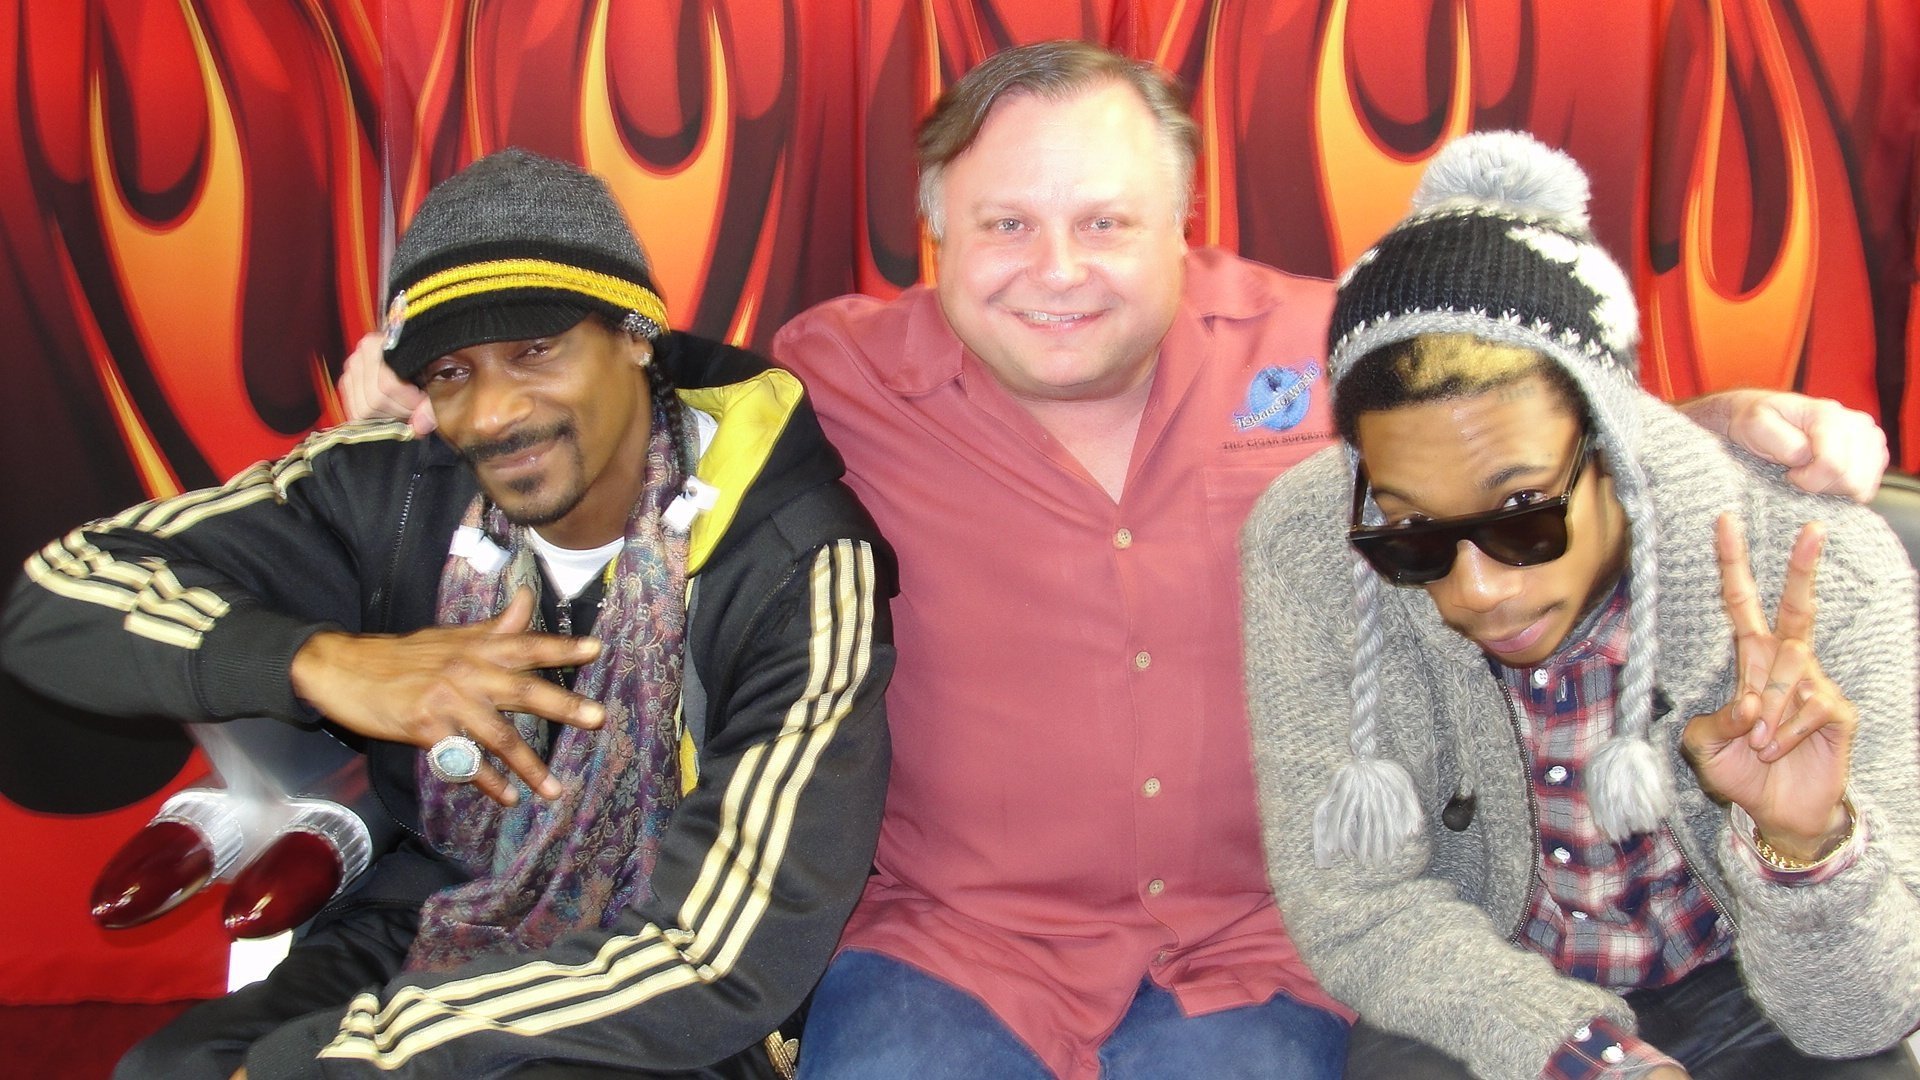 Snoop, Wiz and Rusty